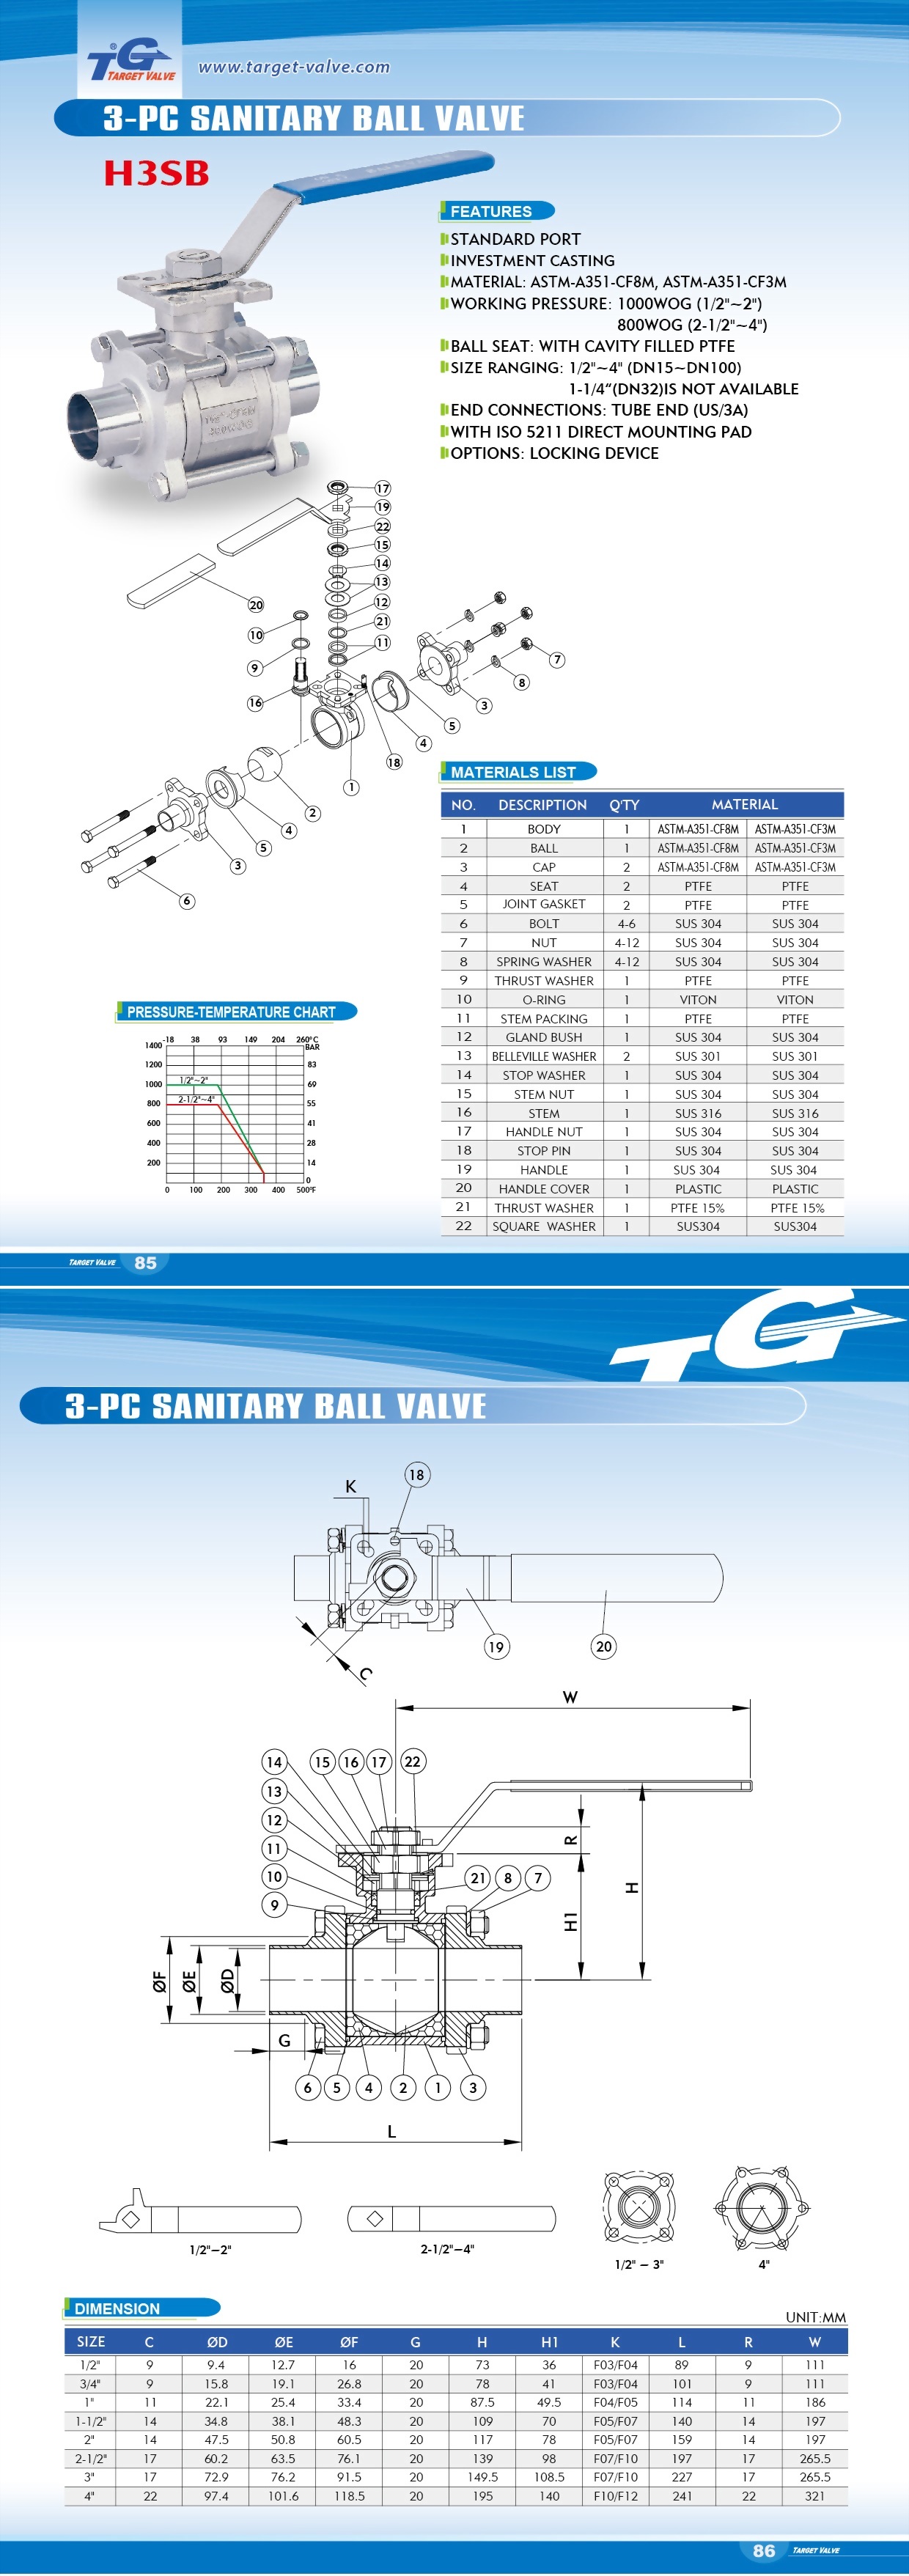 3 PC SANITARY BALL VALVE - H3SB